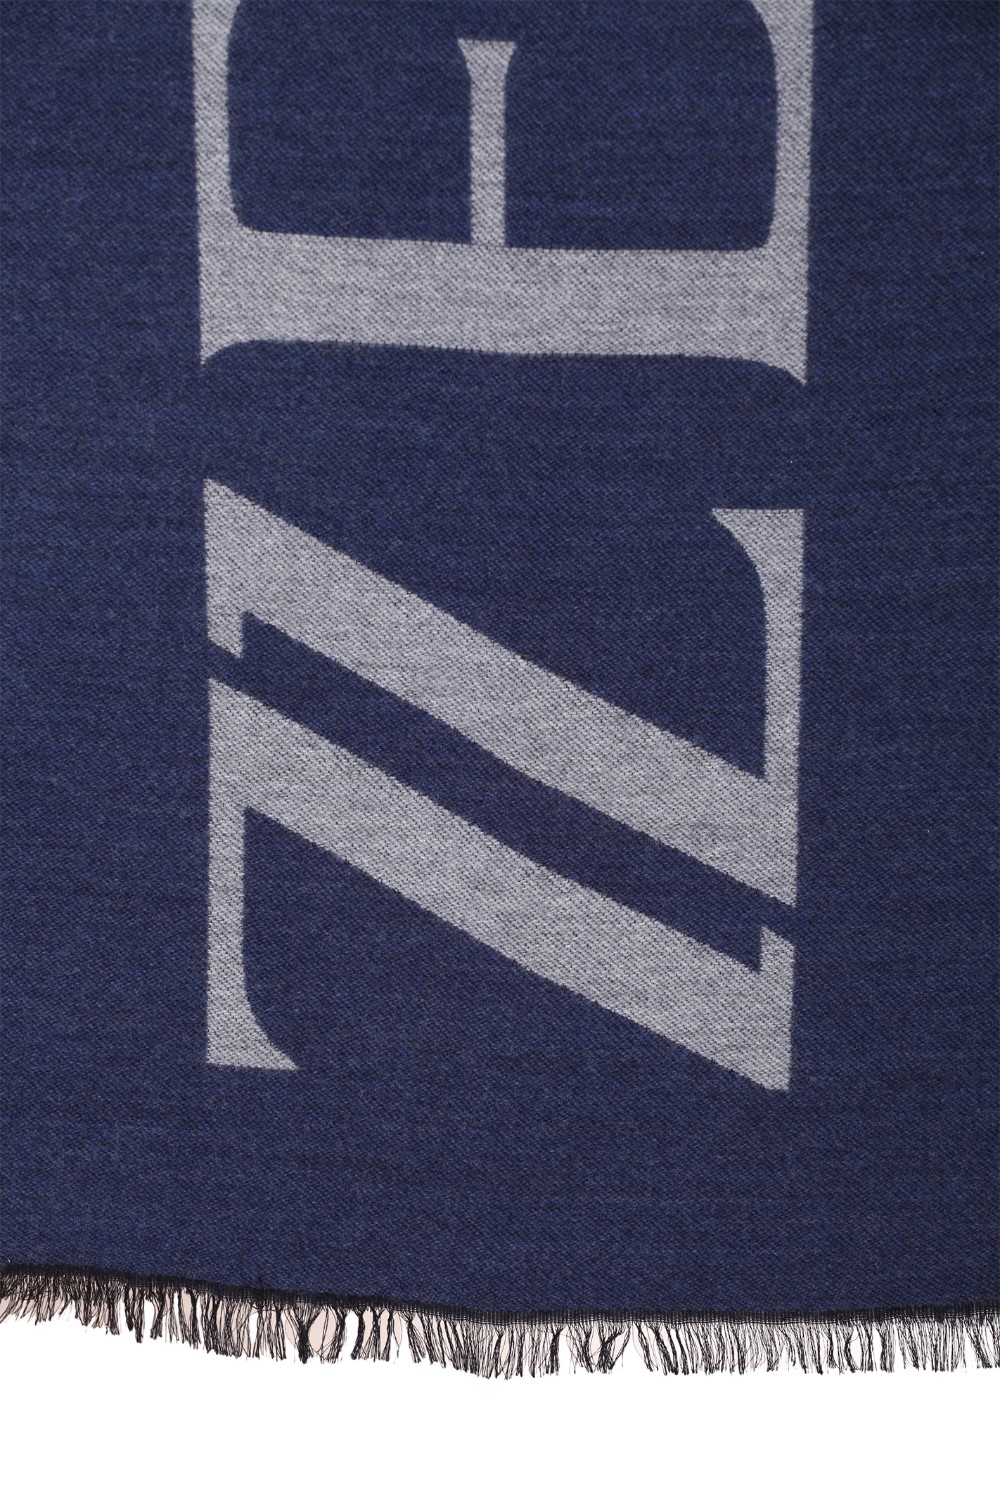 shop Z ZEGNA  Sciarpa: Z Zegna sciarpa in lana.
Logo Z Zegna a contrasto di colore.
Bordi sfrangiati.
Sciarpa in lana blu e grigia.
Dimensioni: 76 x 186cm.
Composizione: 80% lana 20% modal.
Made in Italy.. Z8L75 28J-BL2 number 4279865